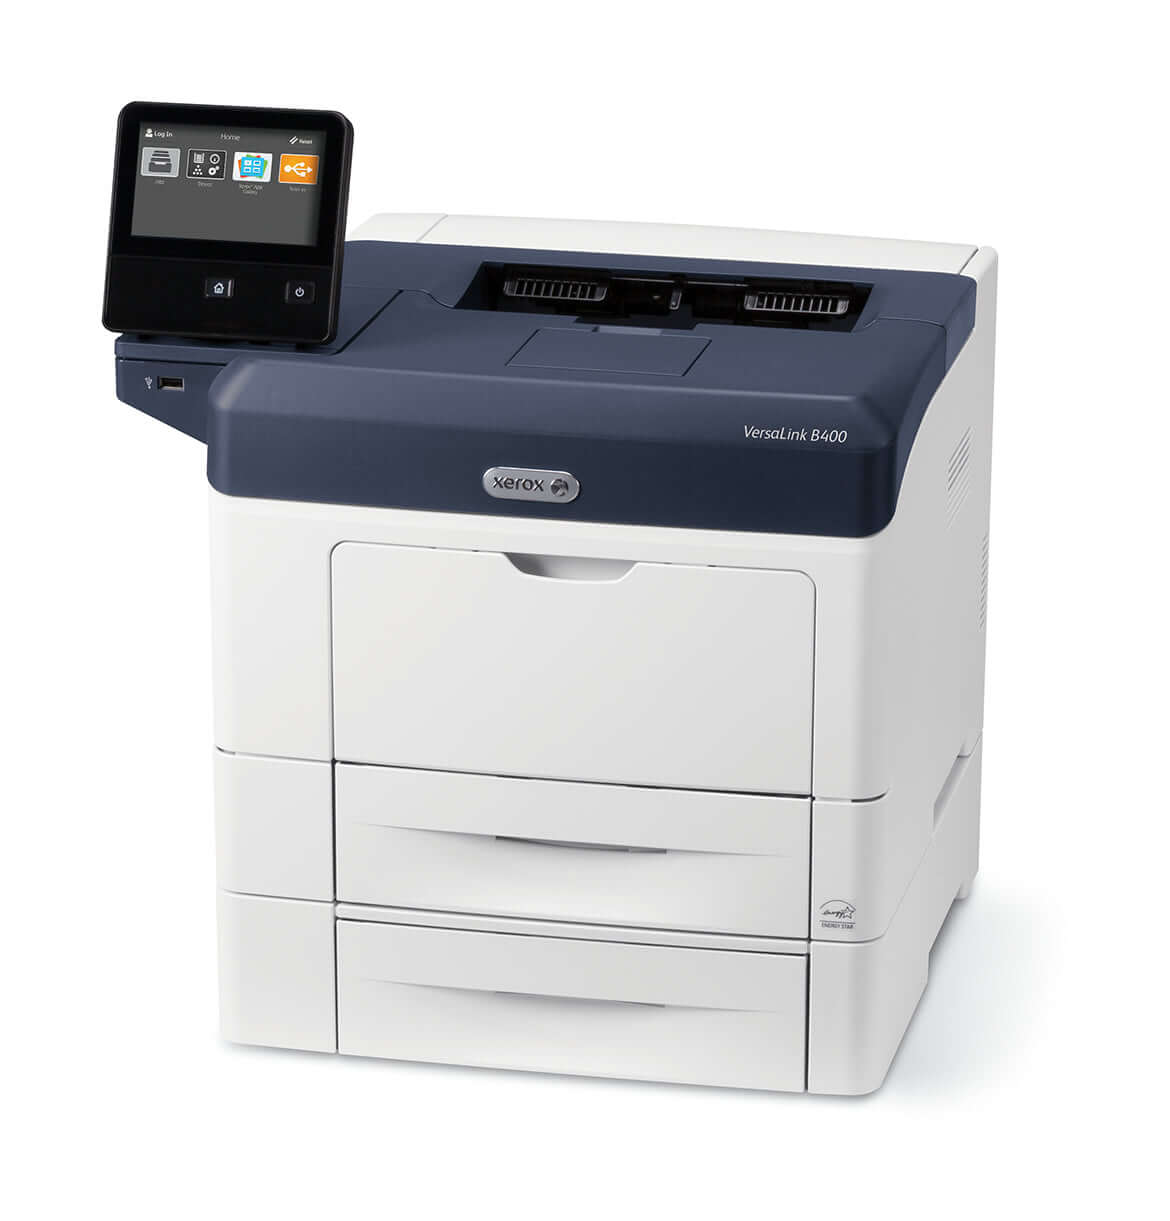 Xerox® VersaLink® B400 A4 Mono Laser Printer